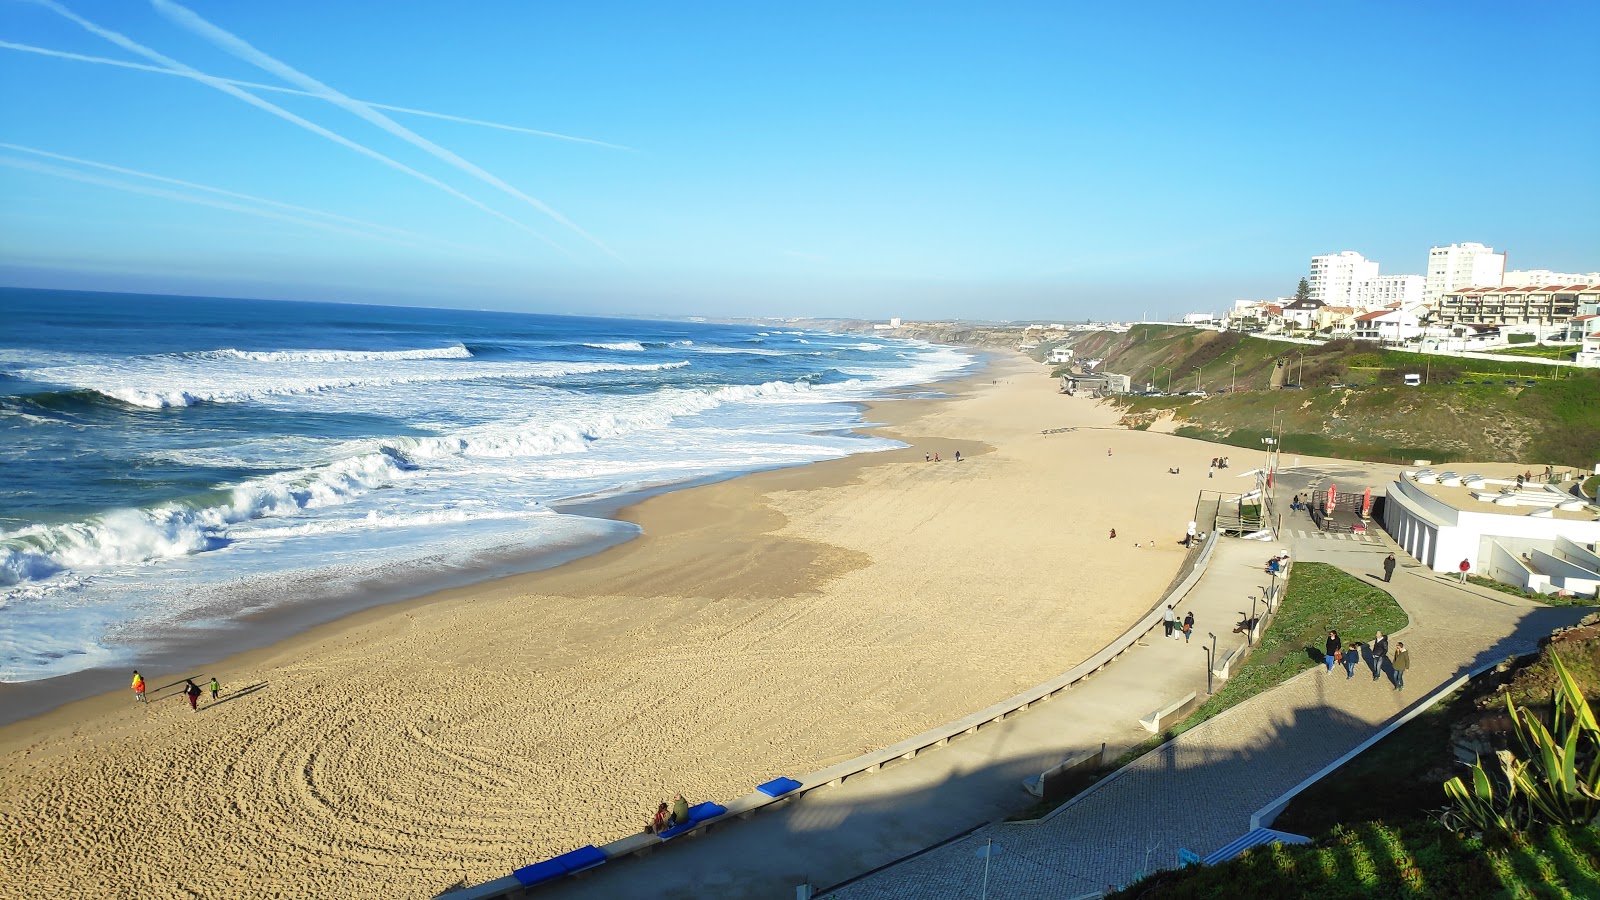 Photo of Praia de Santa Rita - popular place among relax connoisseurs